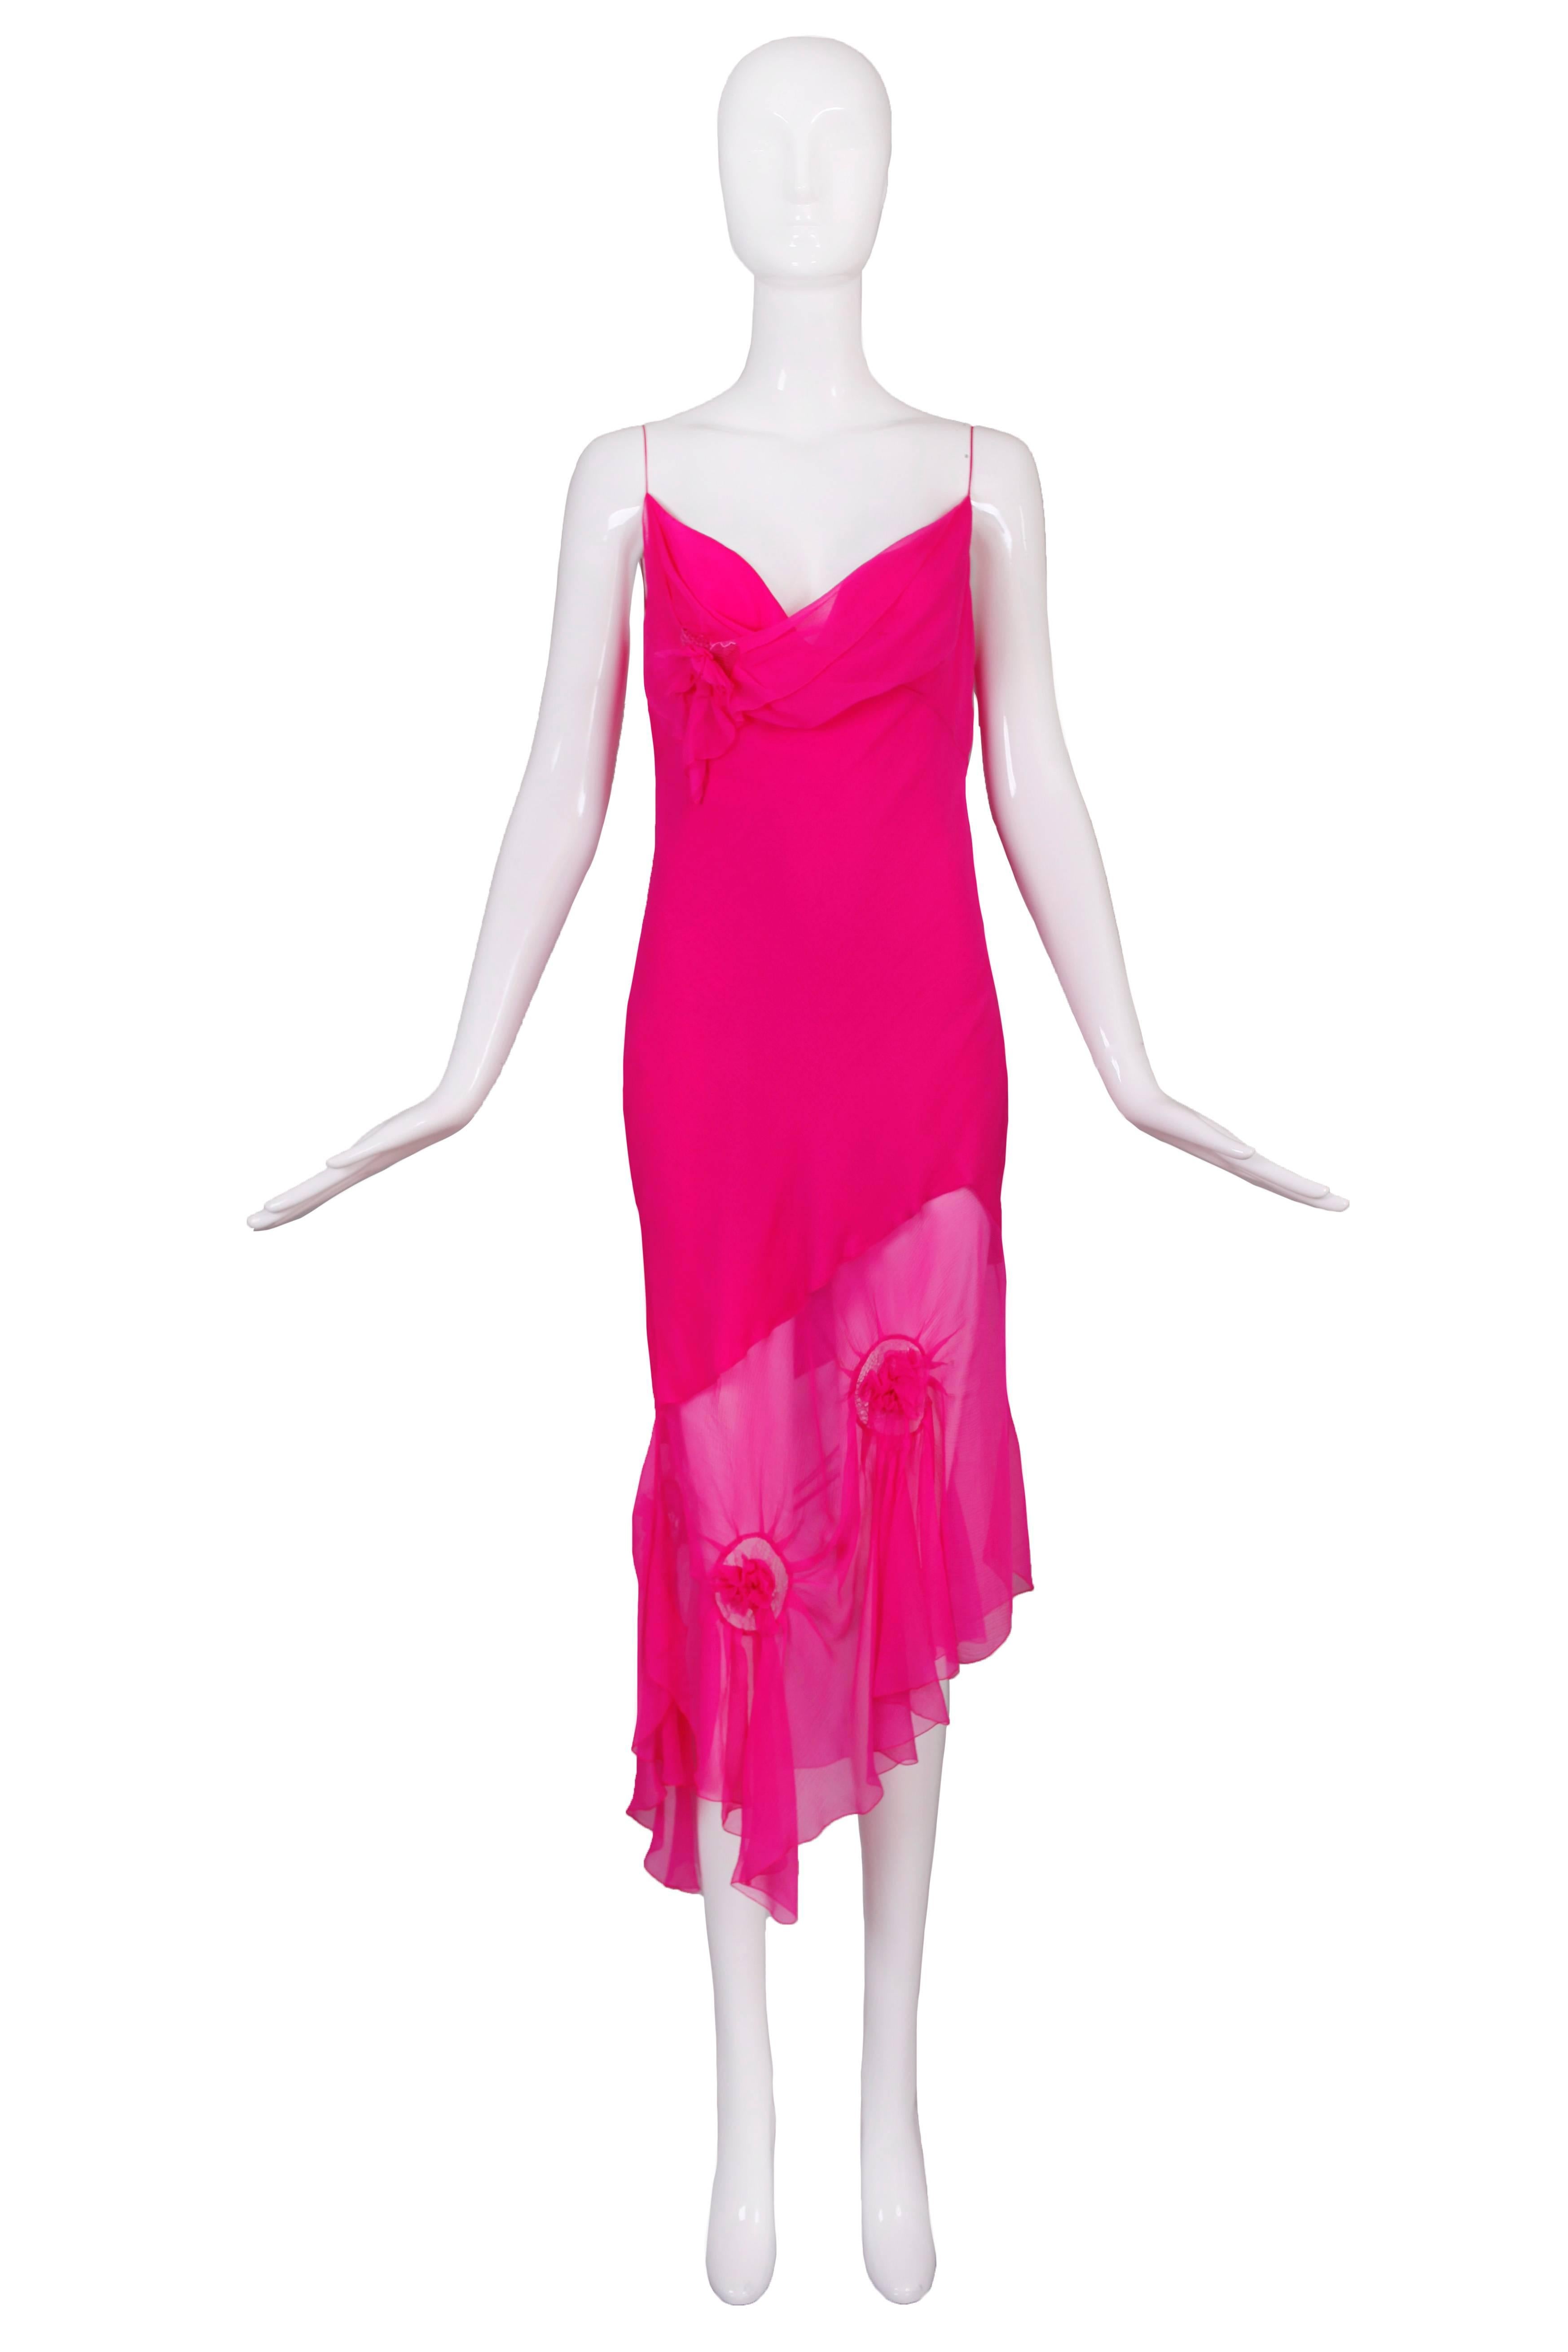 Red John Galliano for Christian Dior Shocking Pink Silk Chiffon Dress Ca. 2000